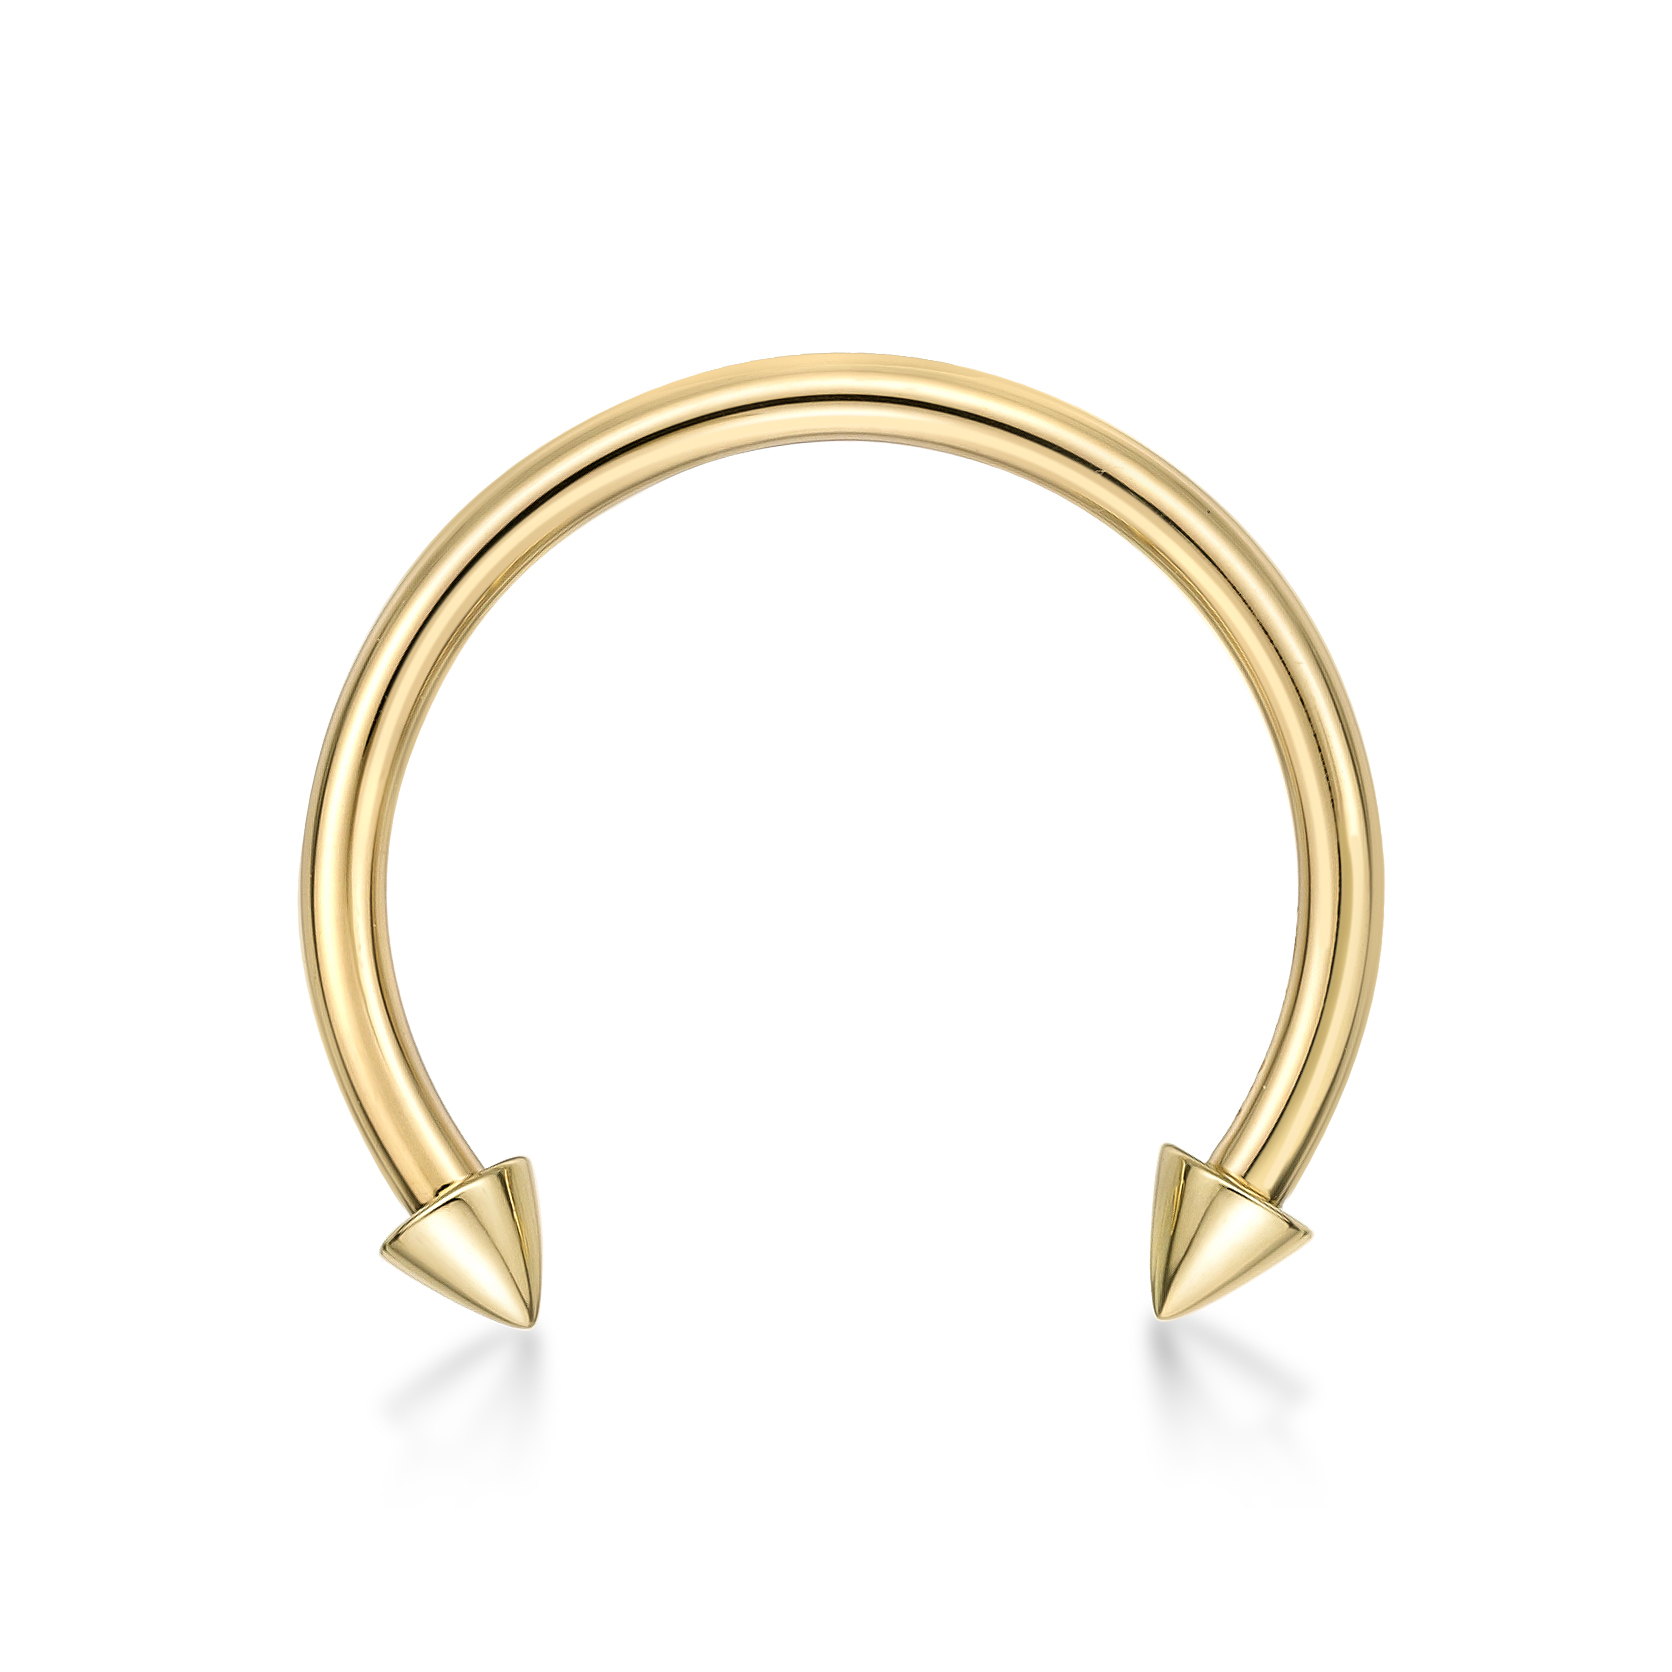 Lavari Jewelers Women's Circular Horseshoe Nipple Ring with Spikes, 14K Yellow Gold, 5/8 Inch, 14 Gauge